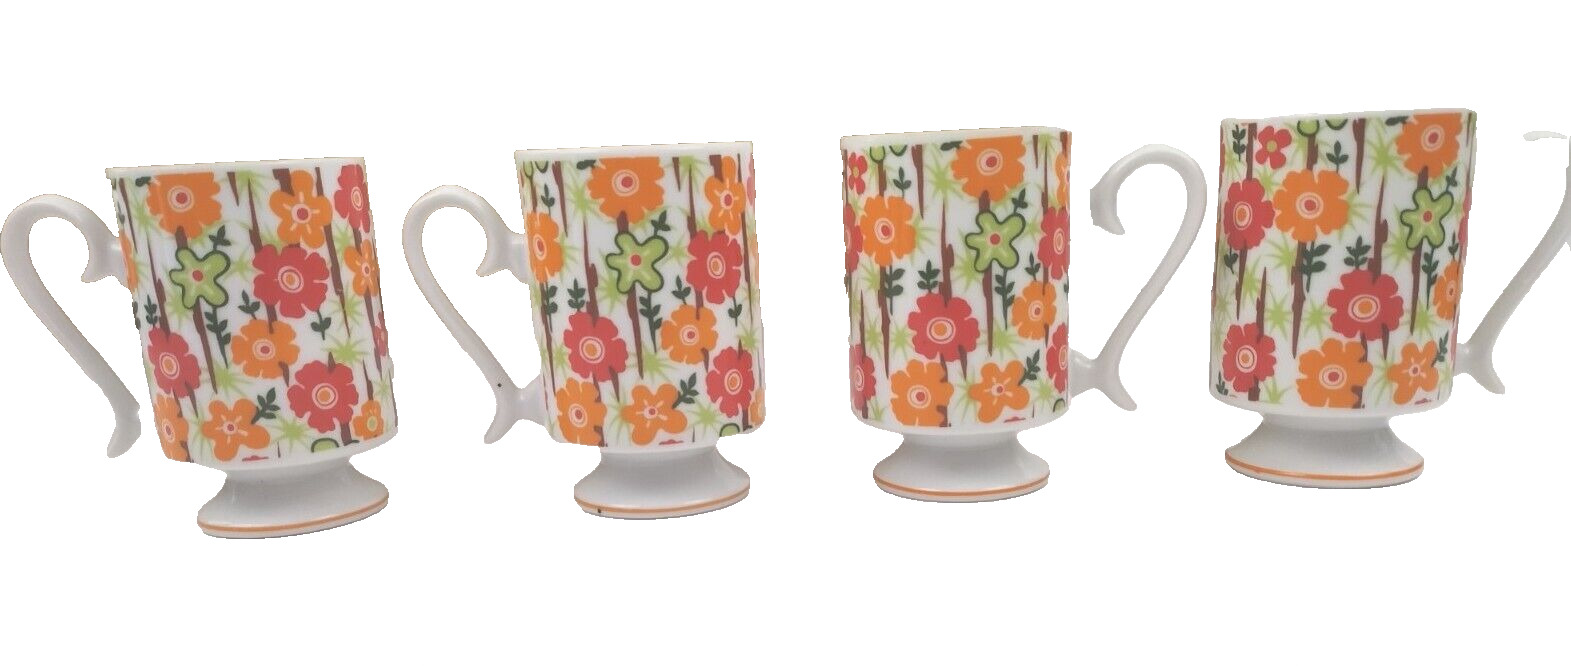 MCM Flower Pedestal Mugs Set Of (4) Cups Coffee Retro Mod 60s 70s Orange Reds